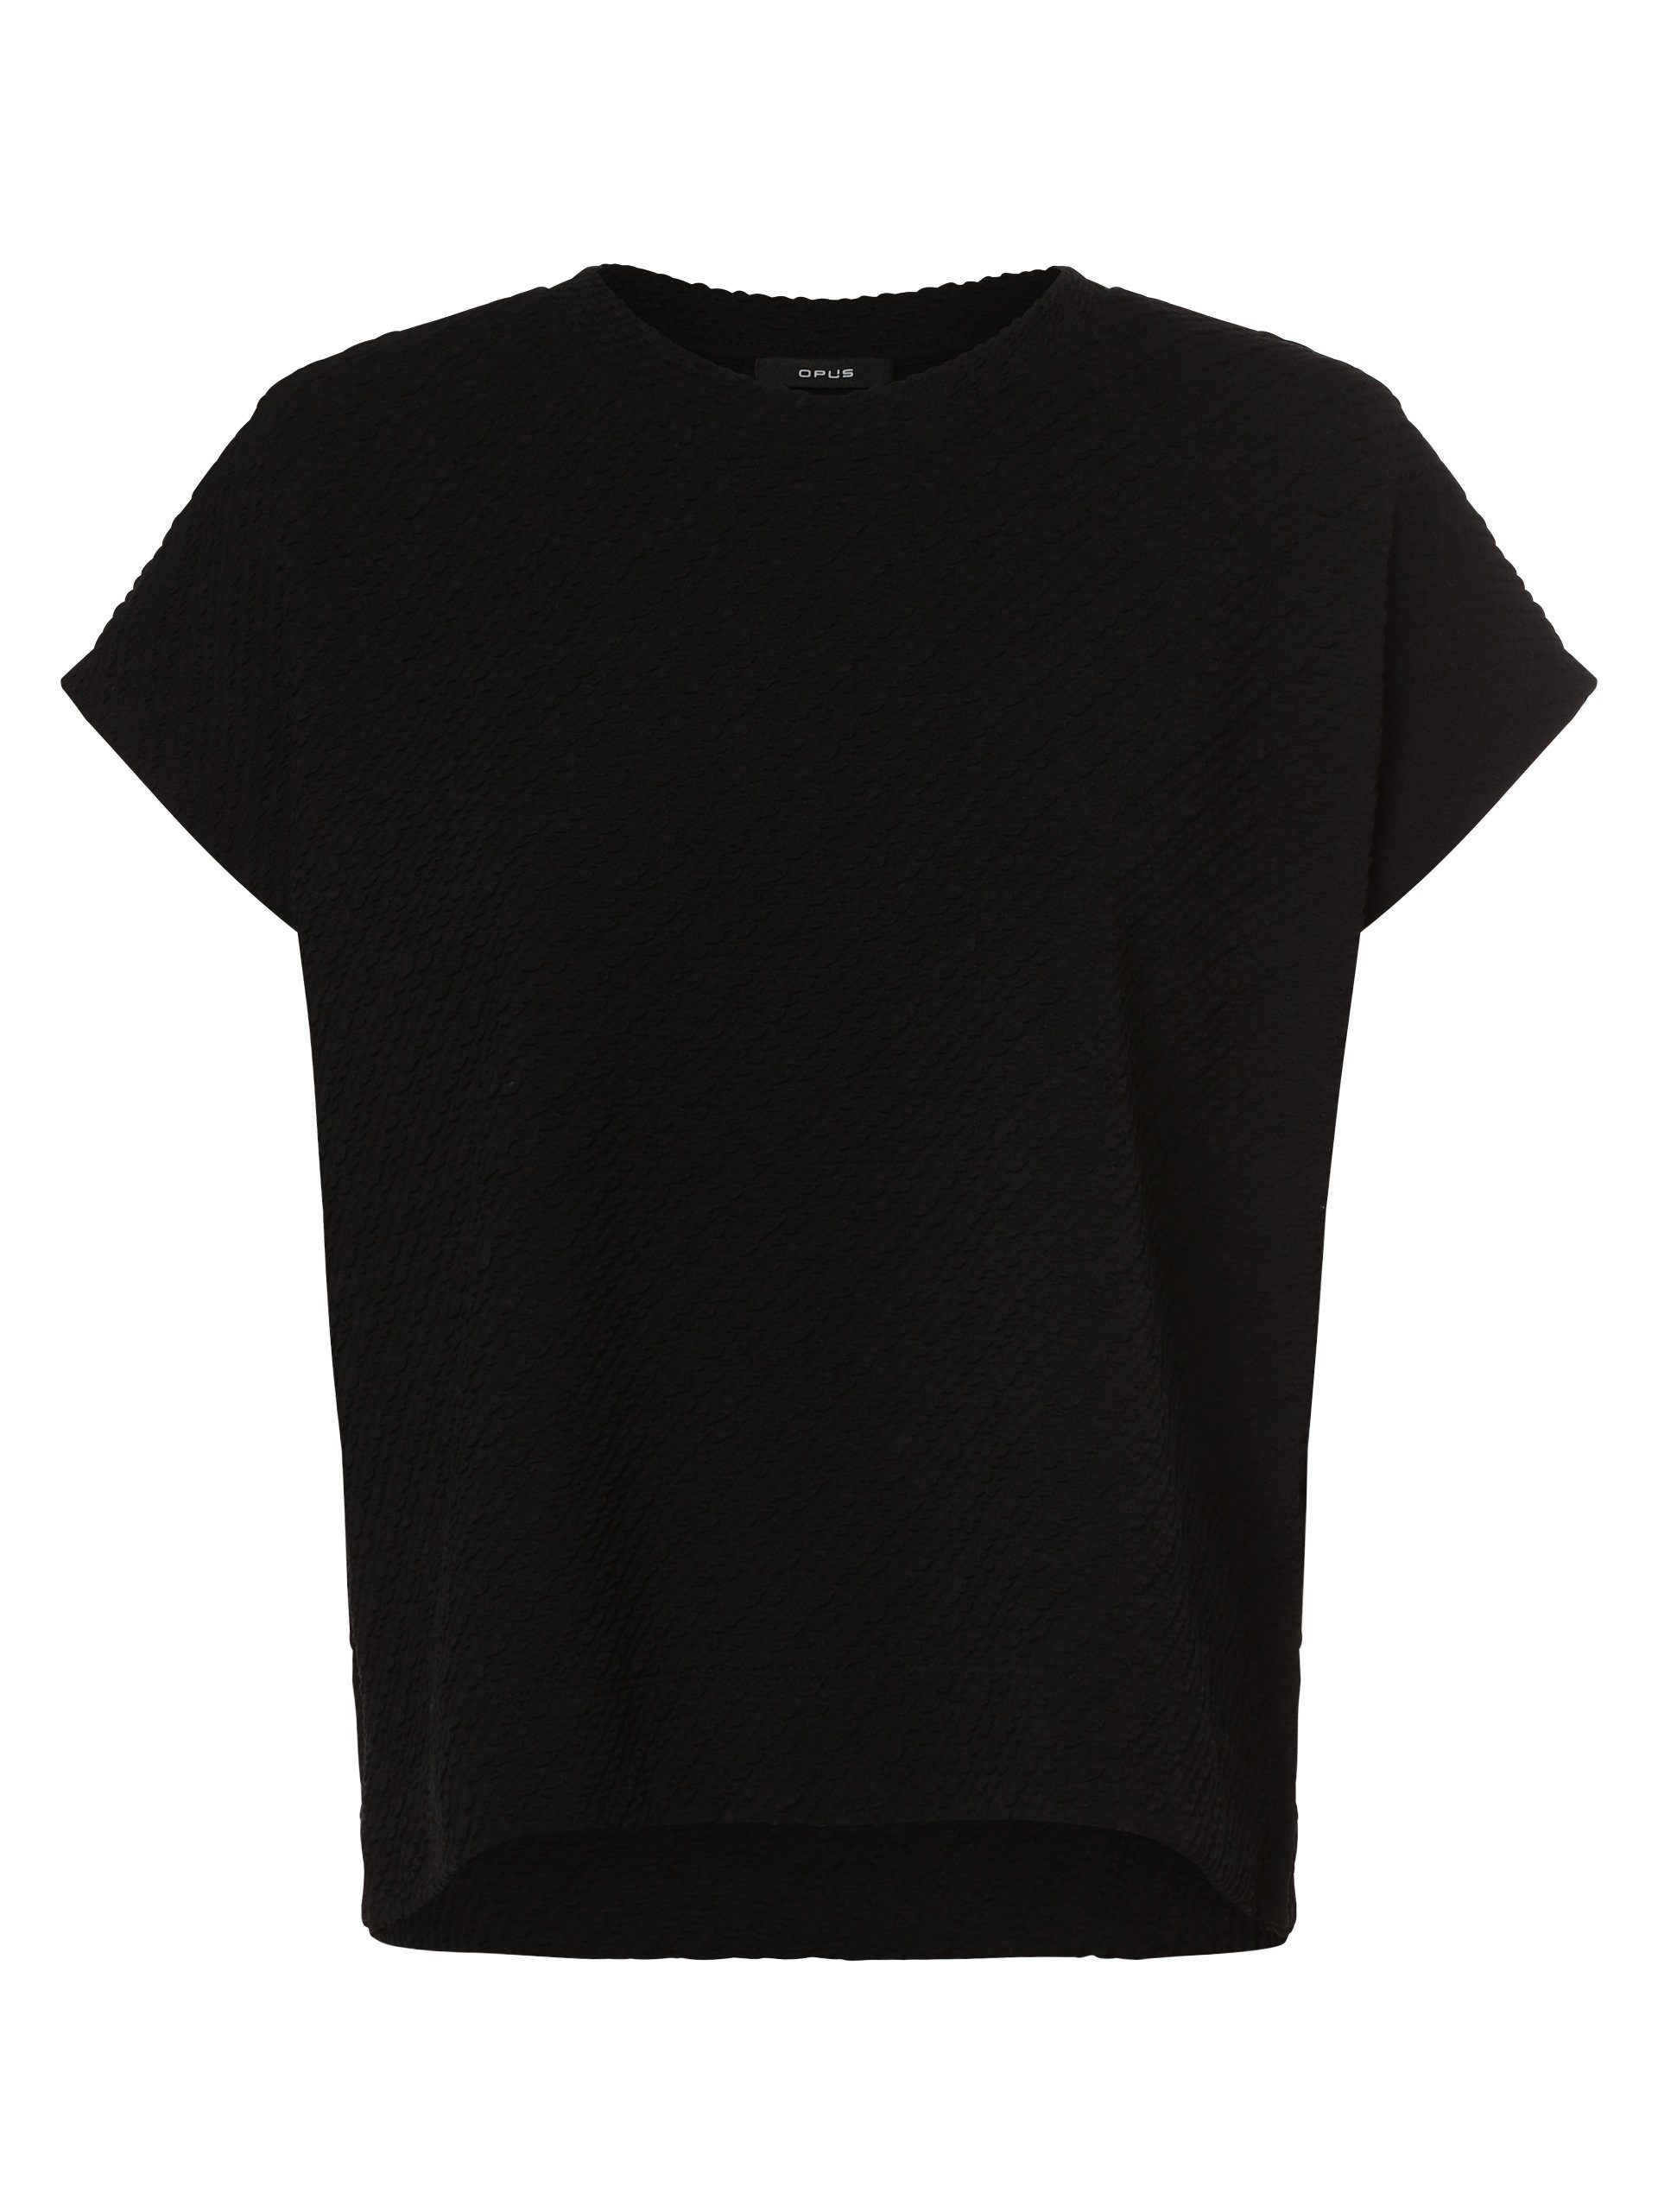 Sweatshirt black Gularu OPUS 900